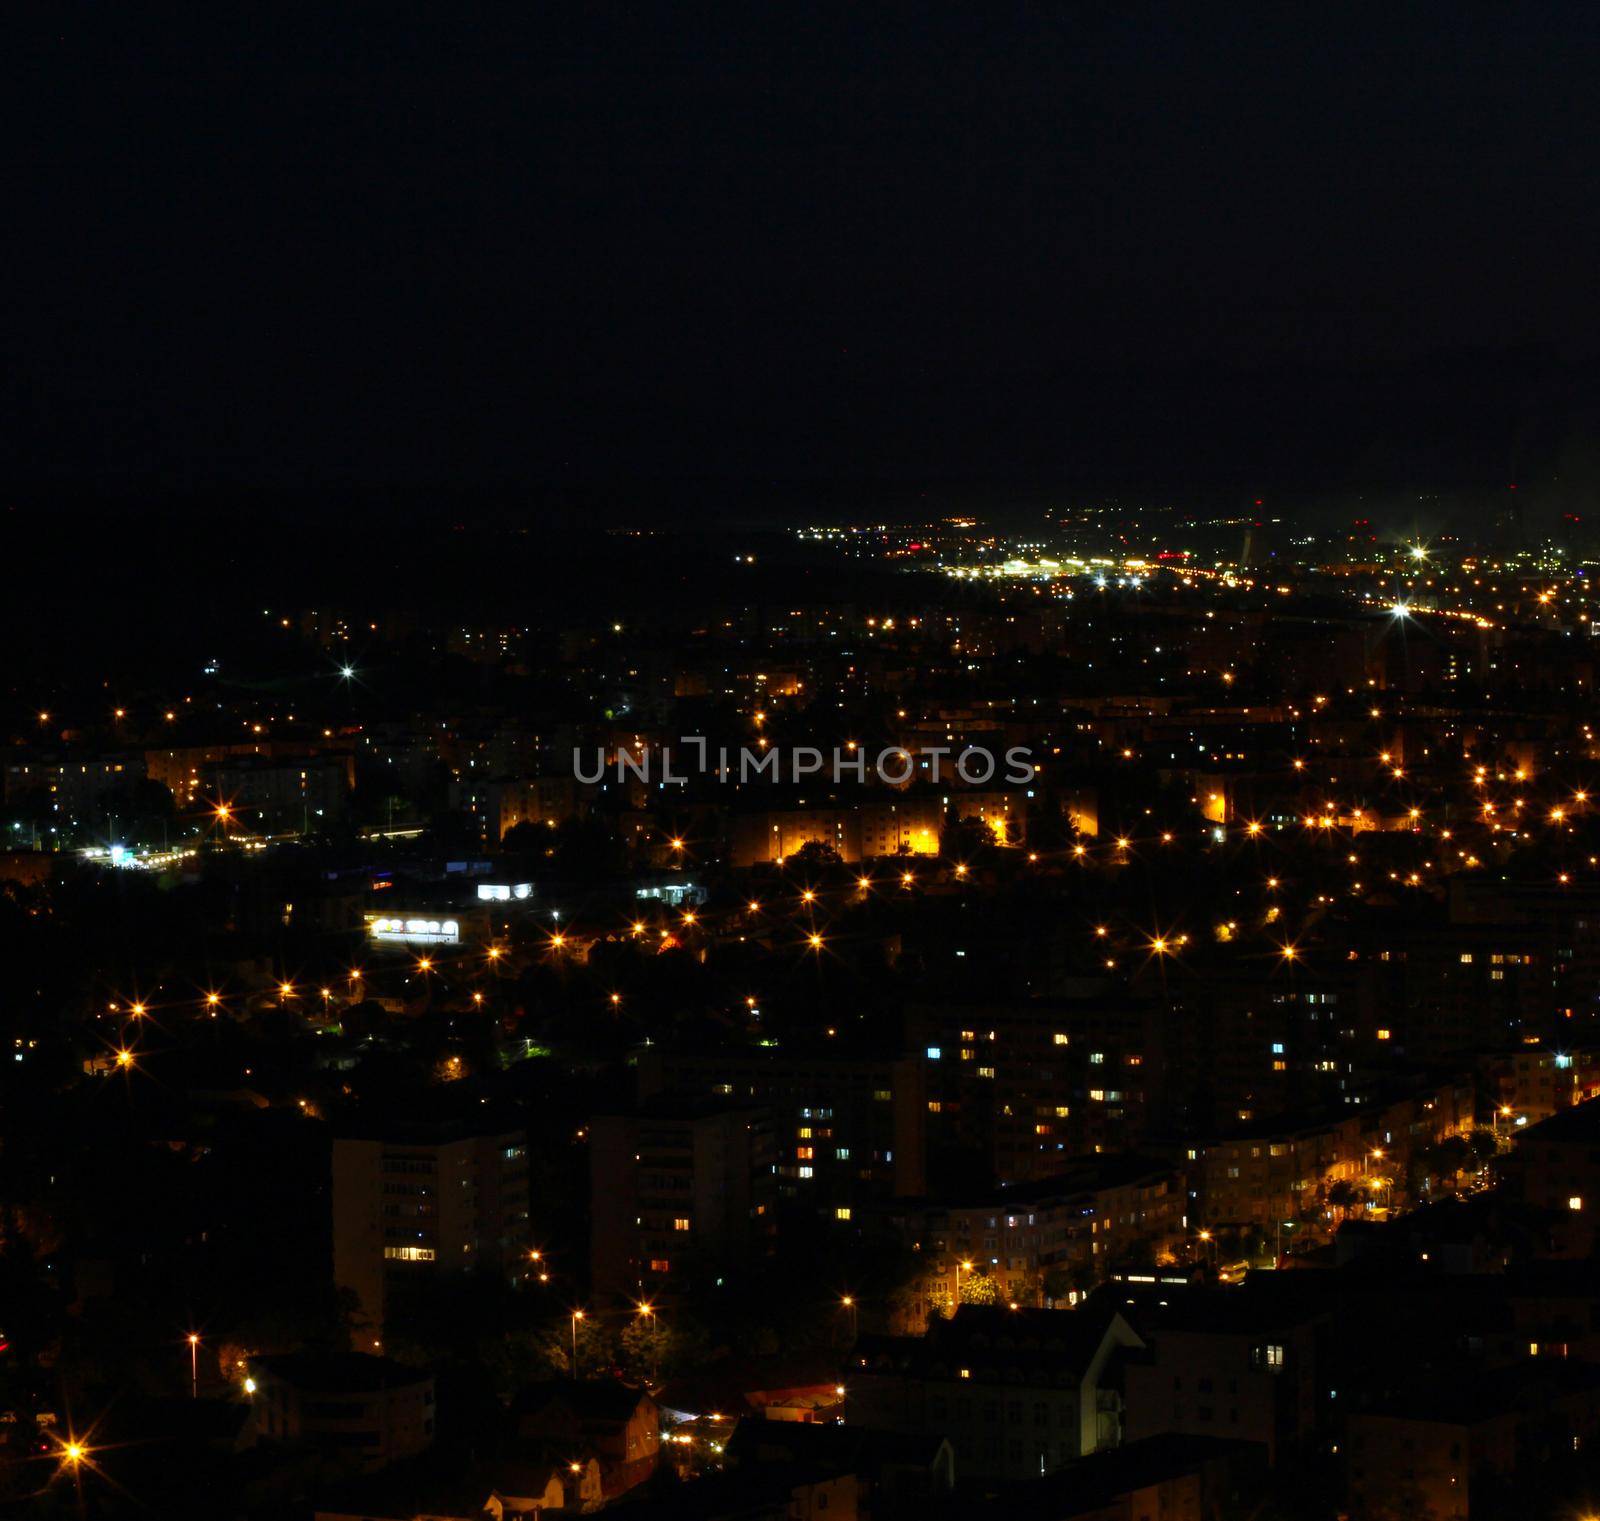 Random city at night time by Lirch